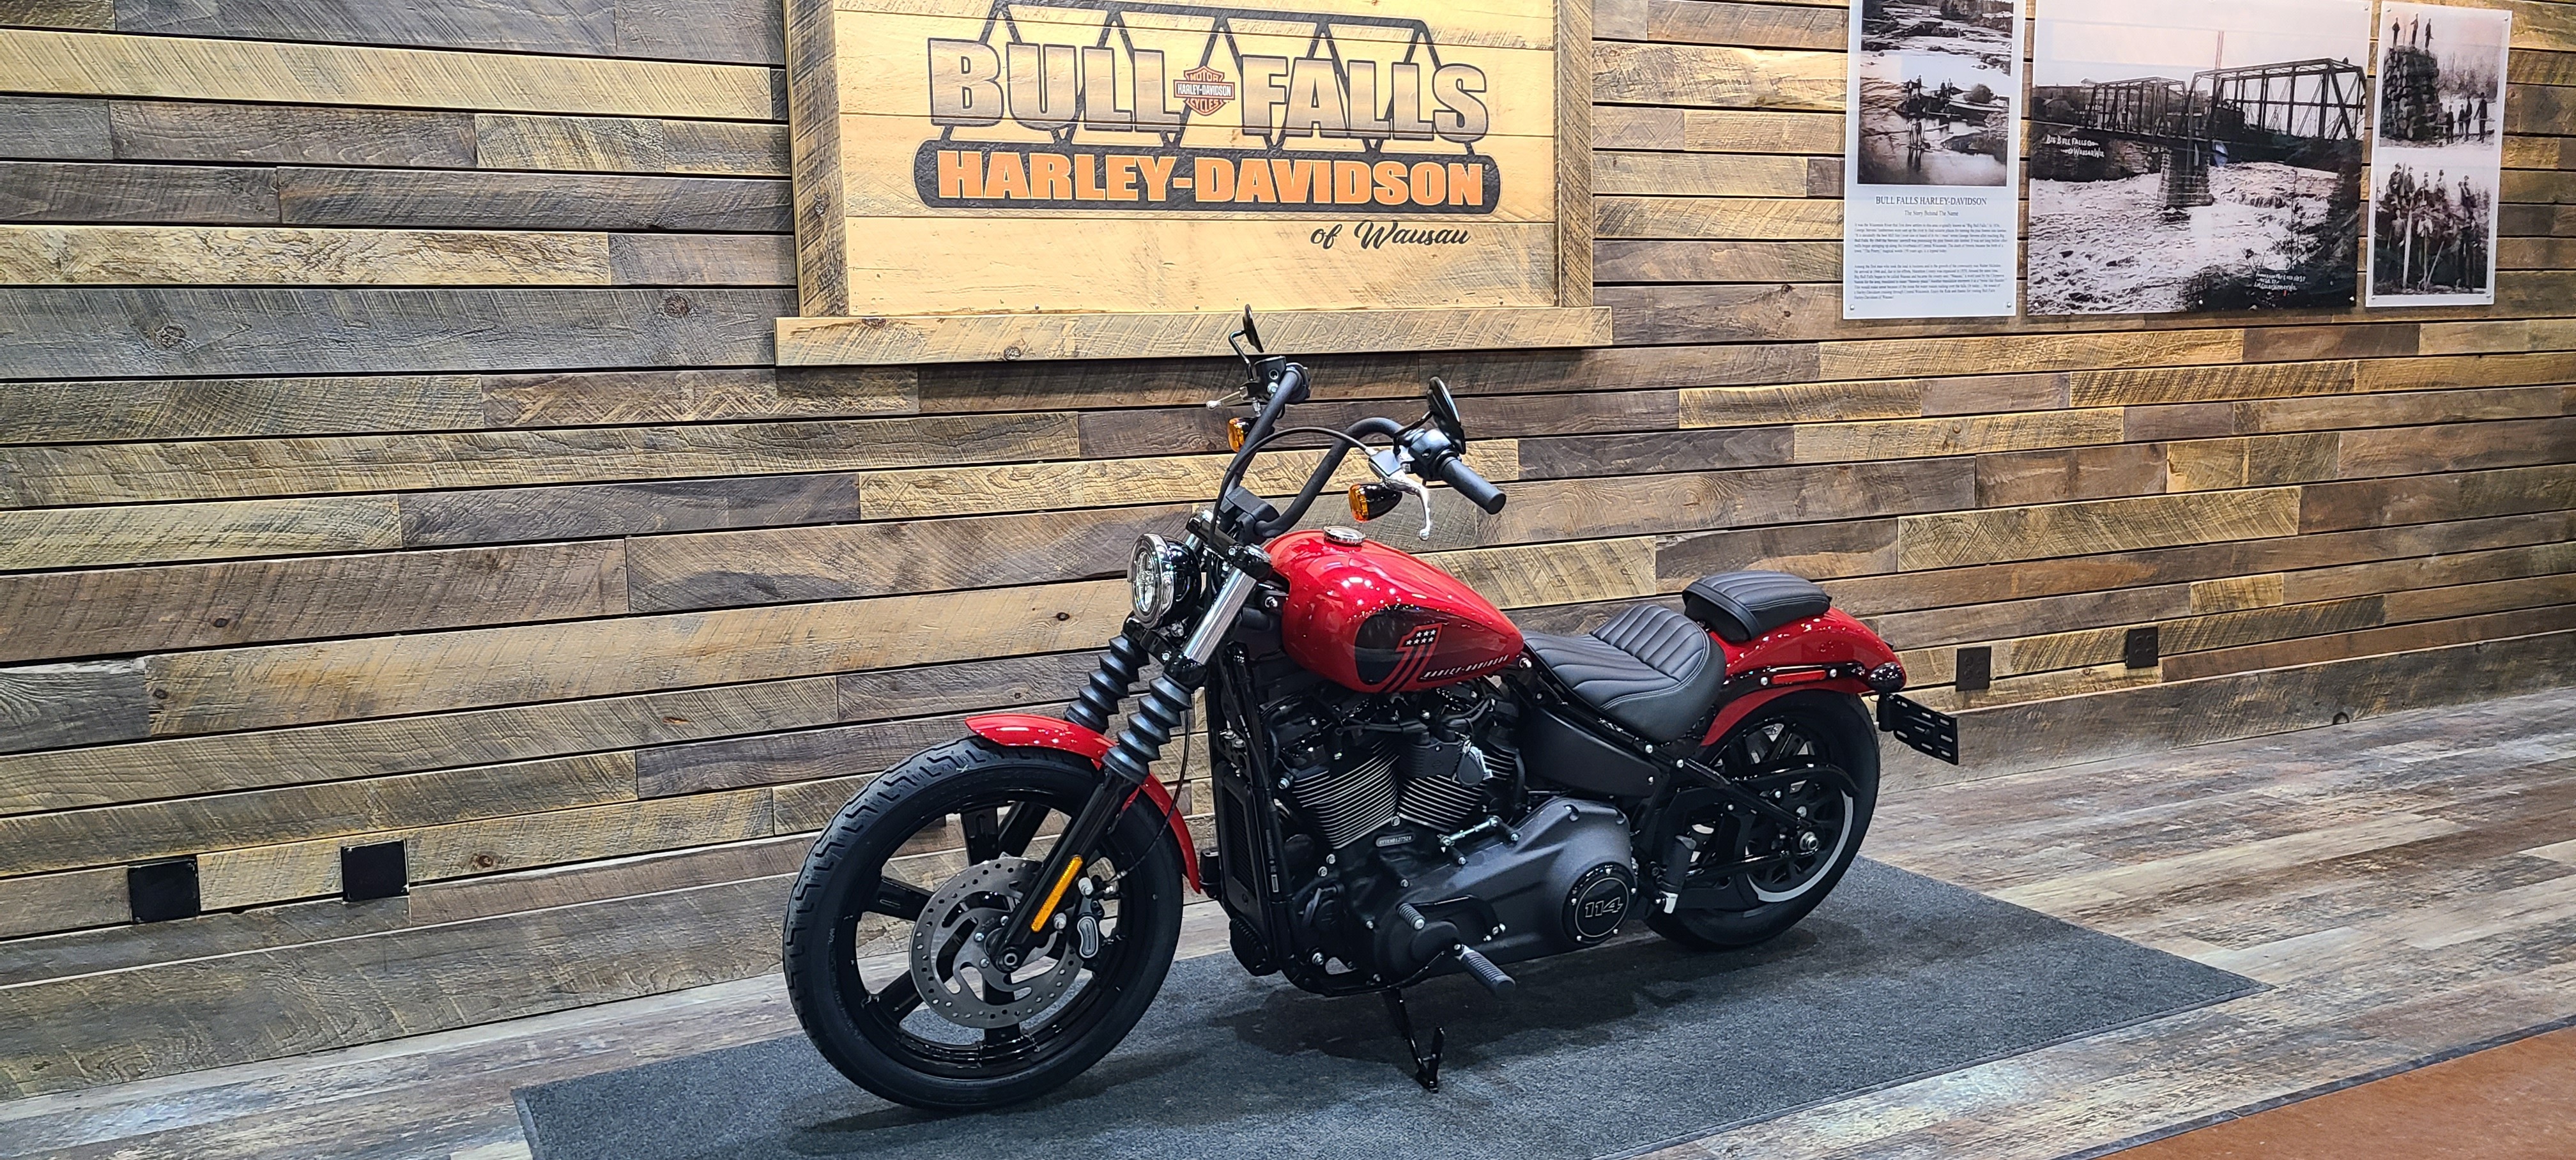 2022 Harley-Davidson Street Bob 114 Street Bob 114 at Bull Falls Harley-Davidson